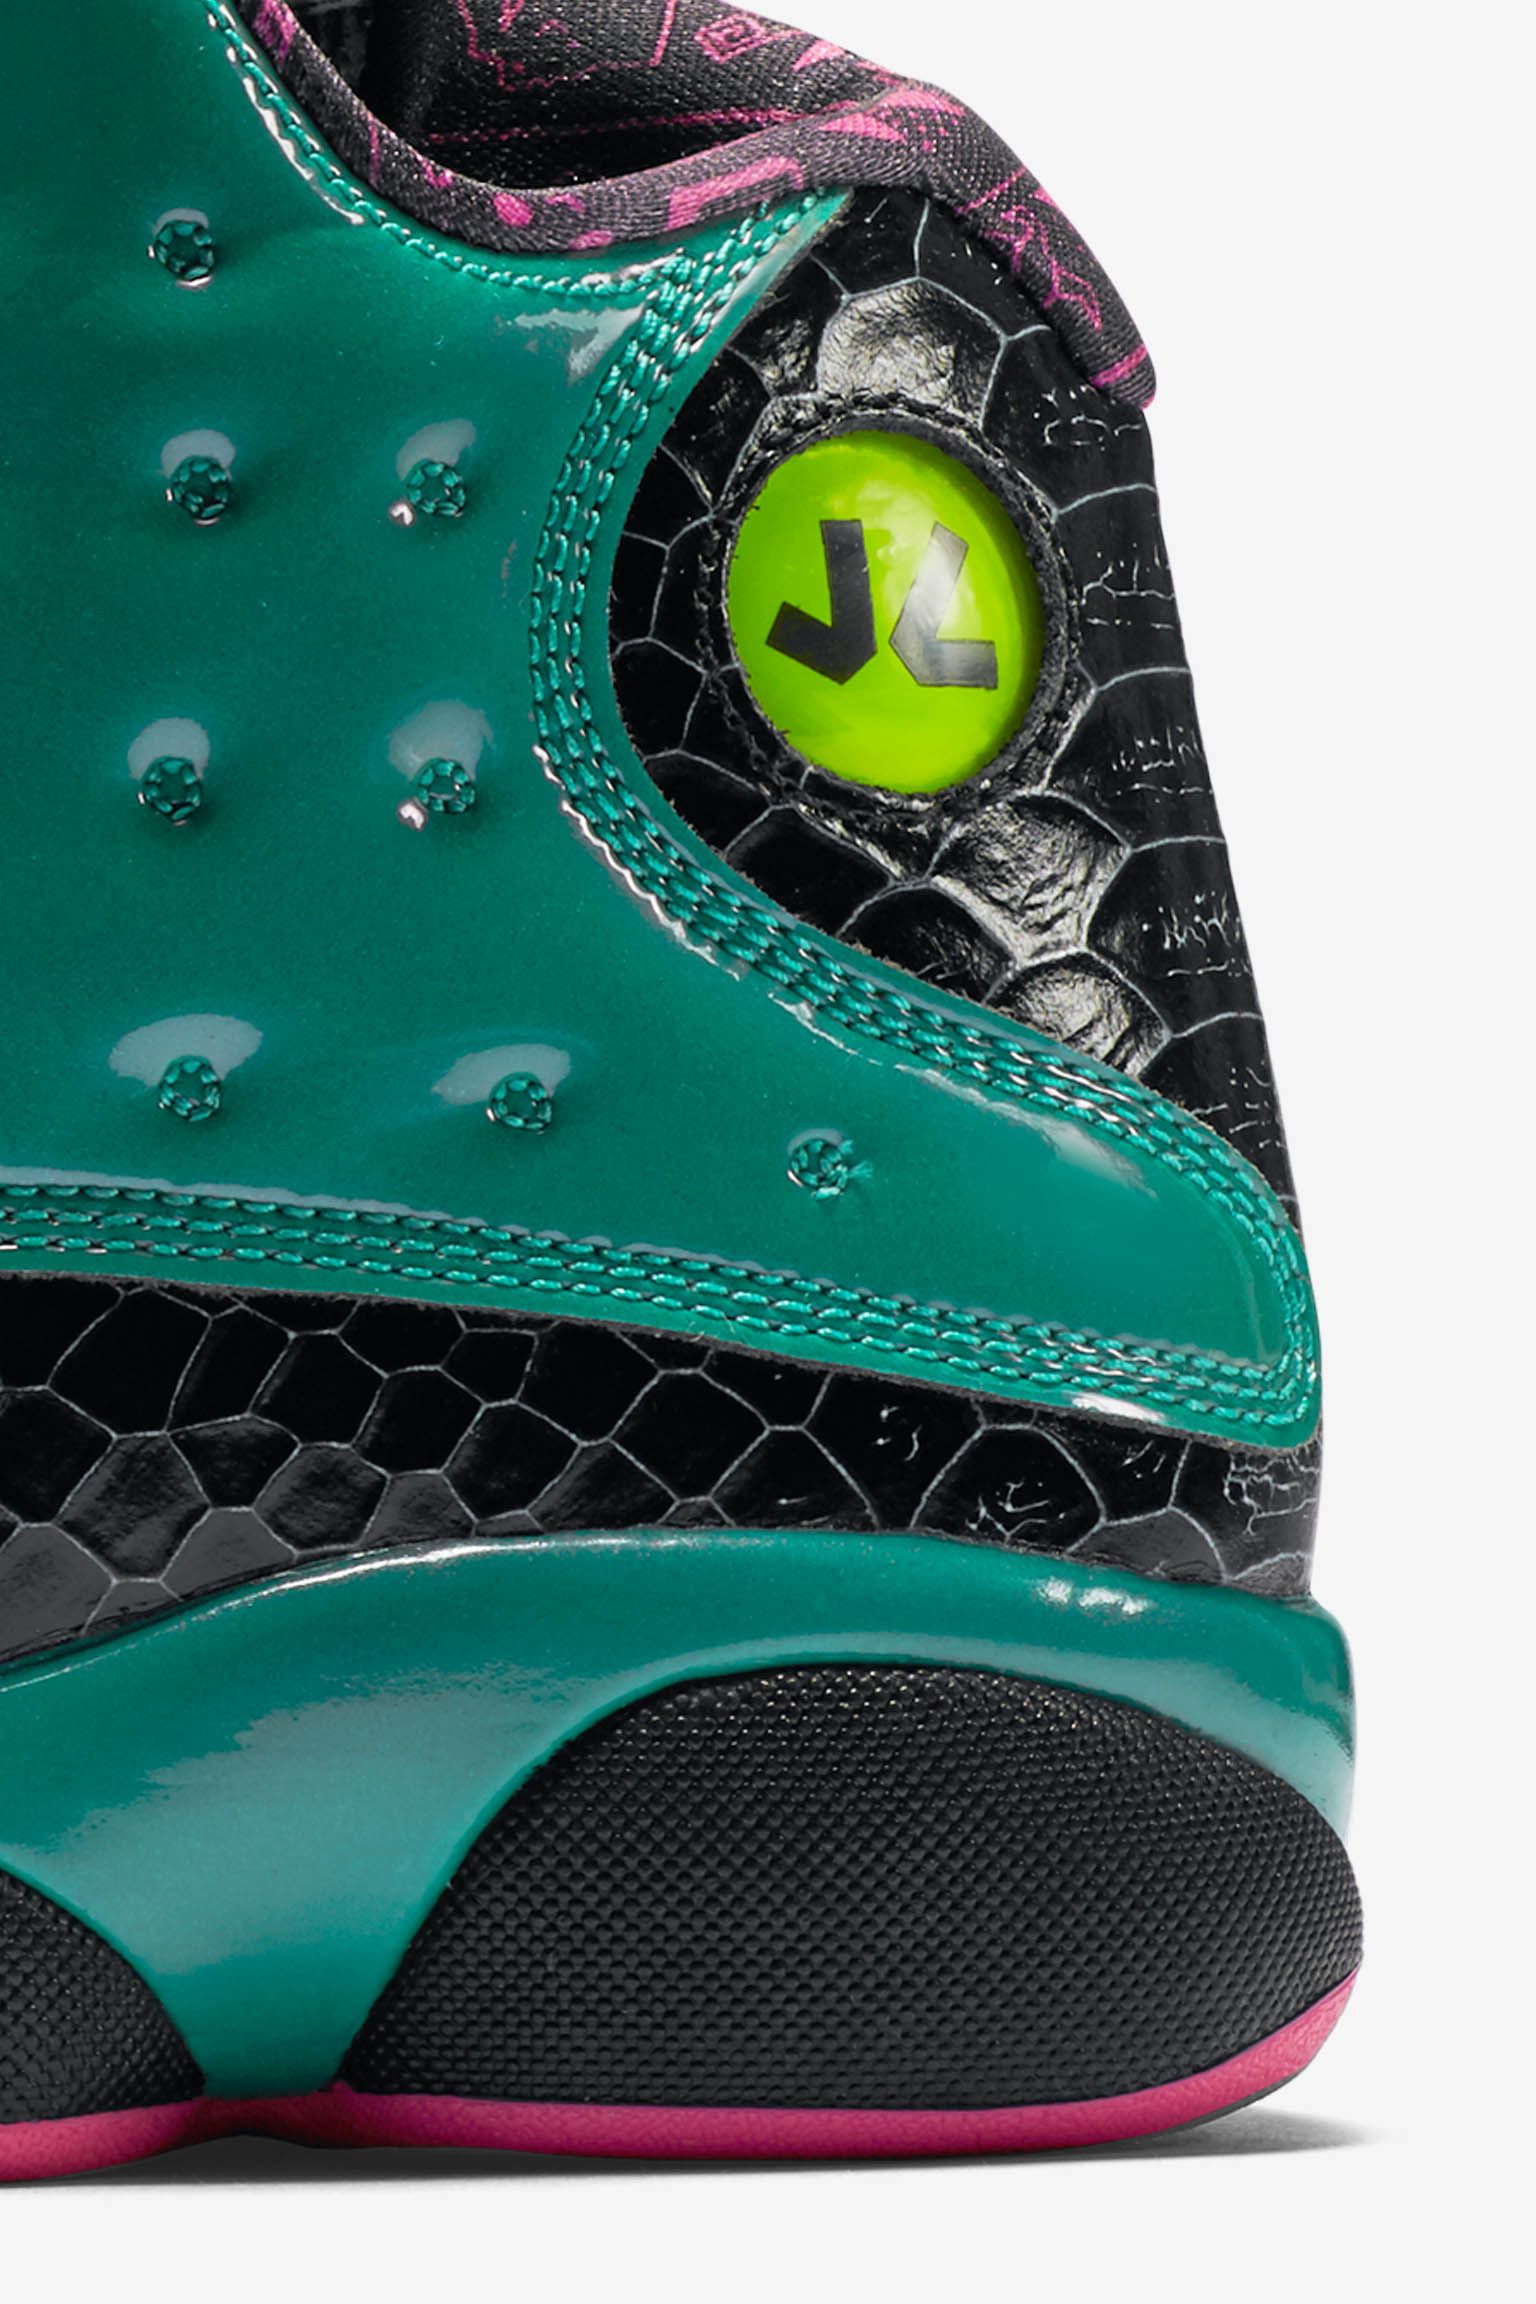 Air Jordan 13 Retro Doernbecher 'Emerald Green' Release Date. Nike 